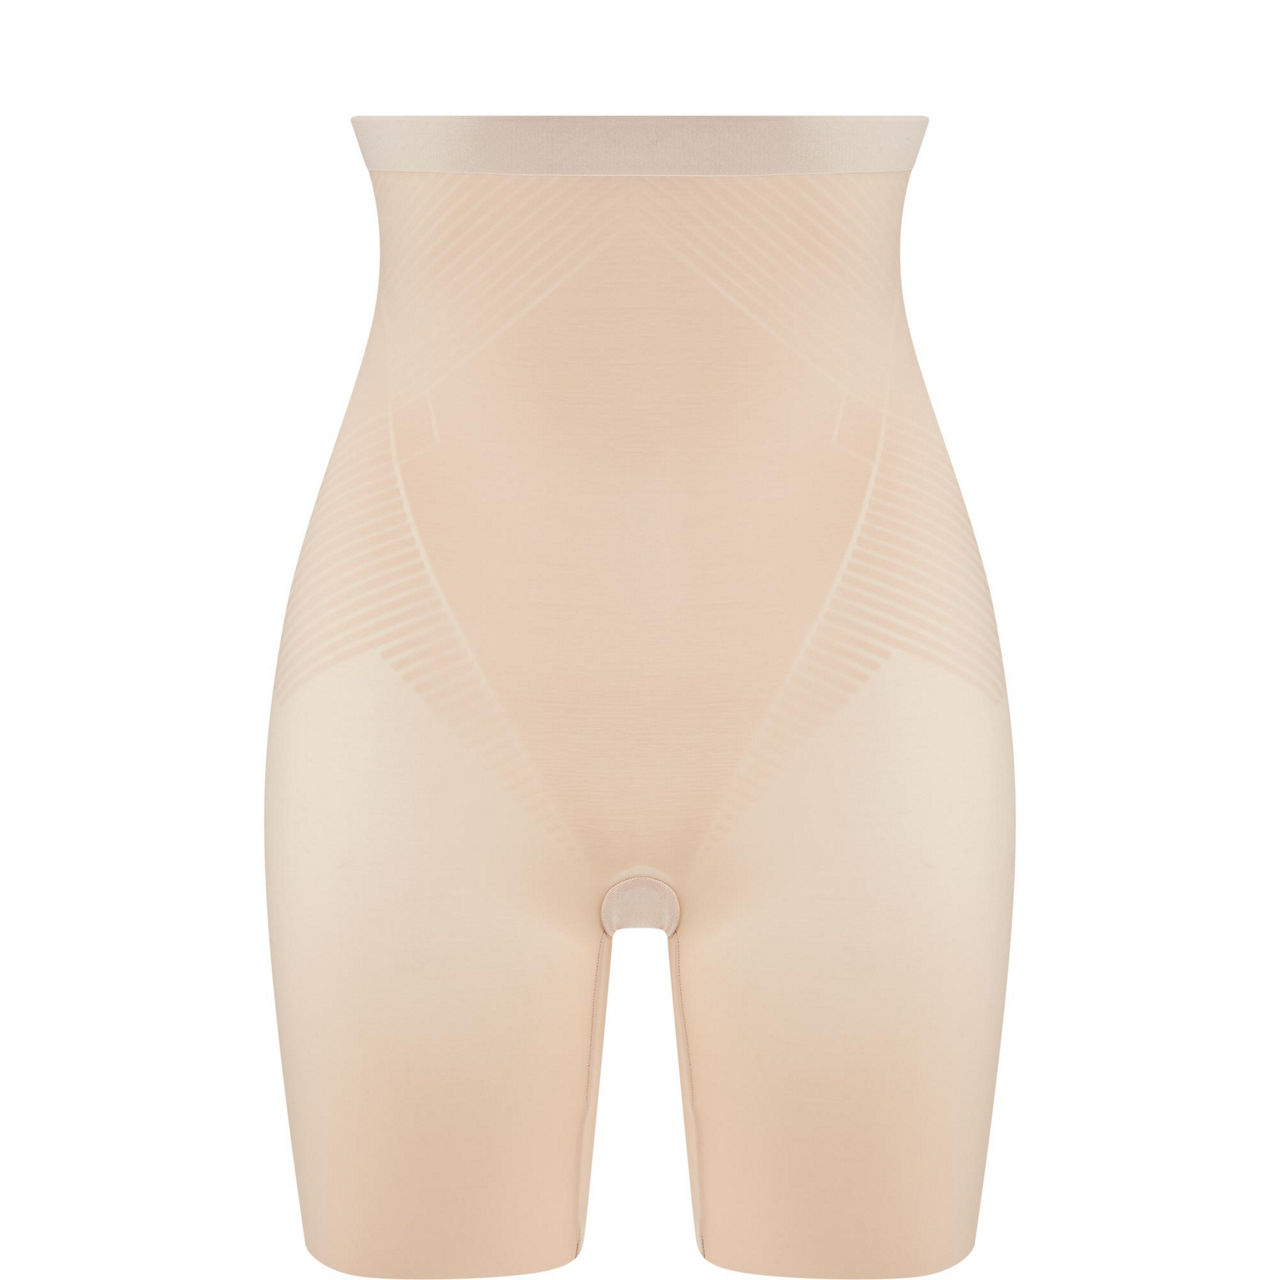 Shaperx Women's XL Beige NWT Tummy Control Shapewear, Seamless Body Shaper